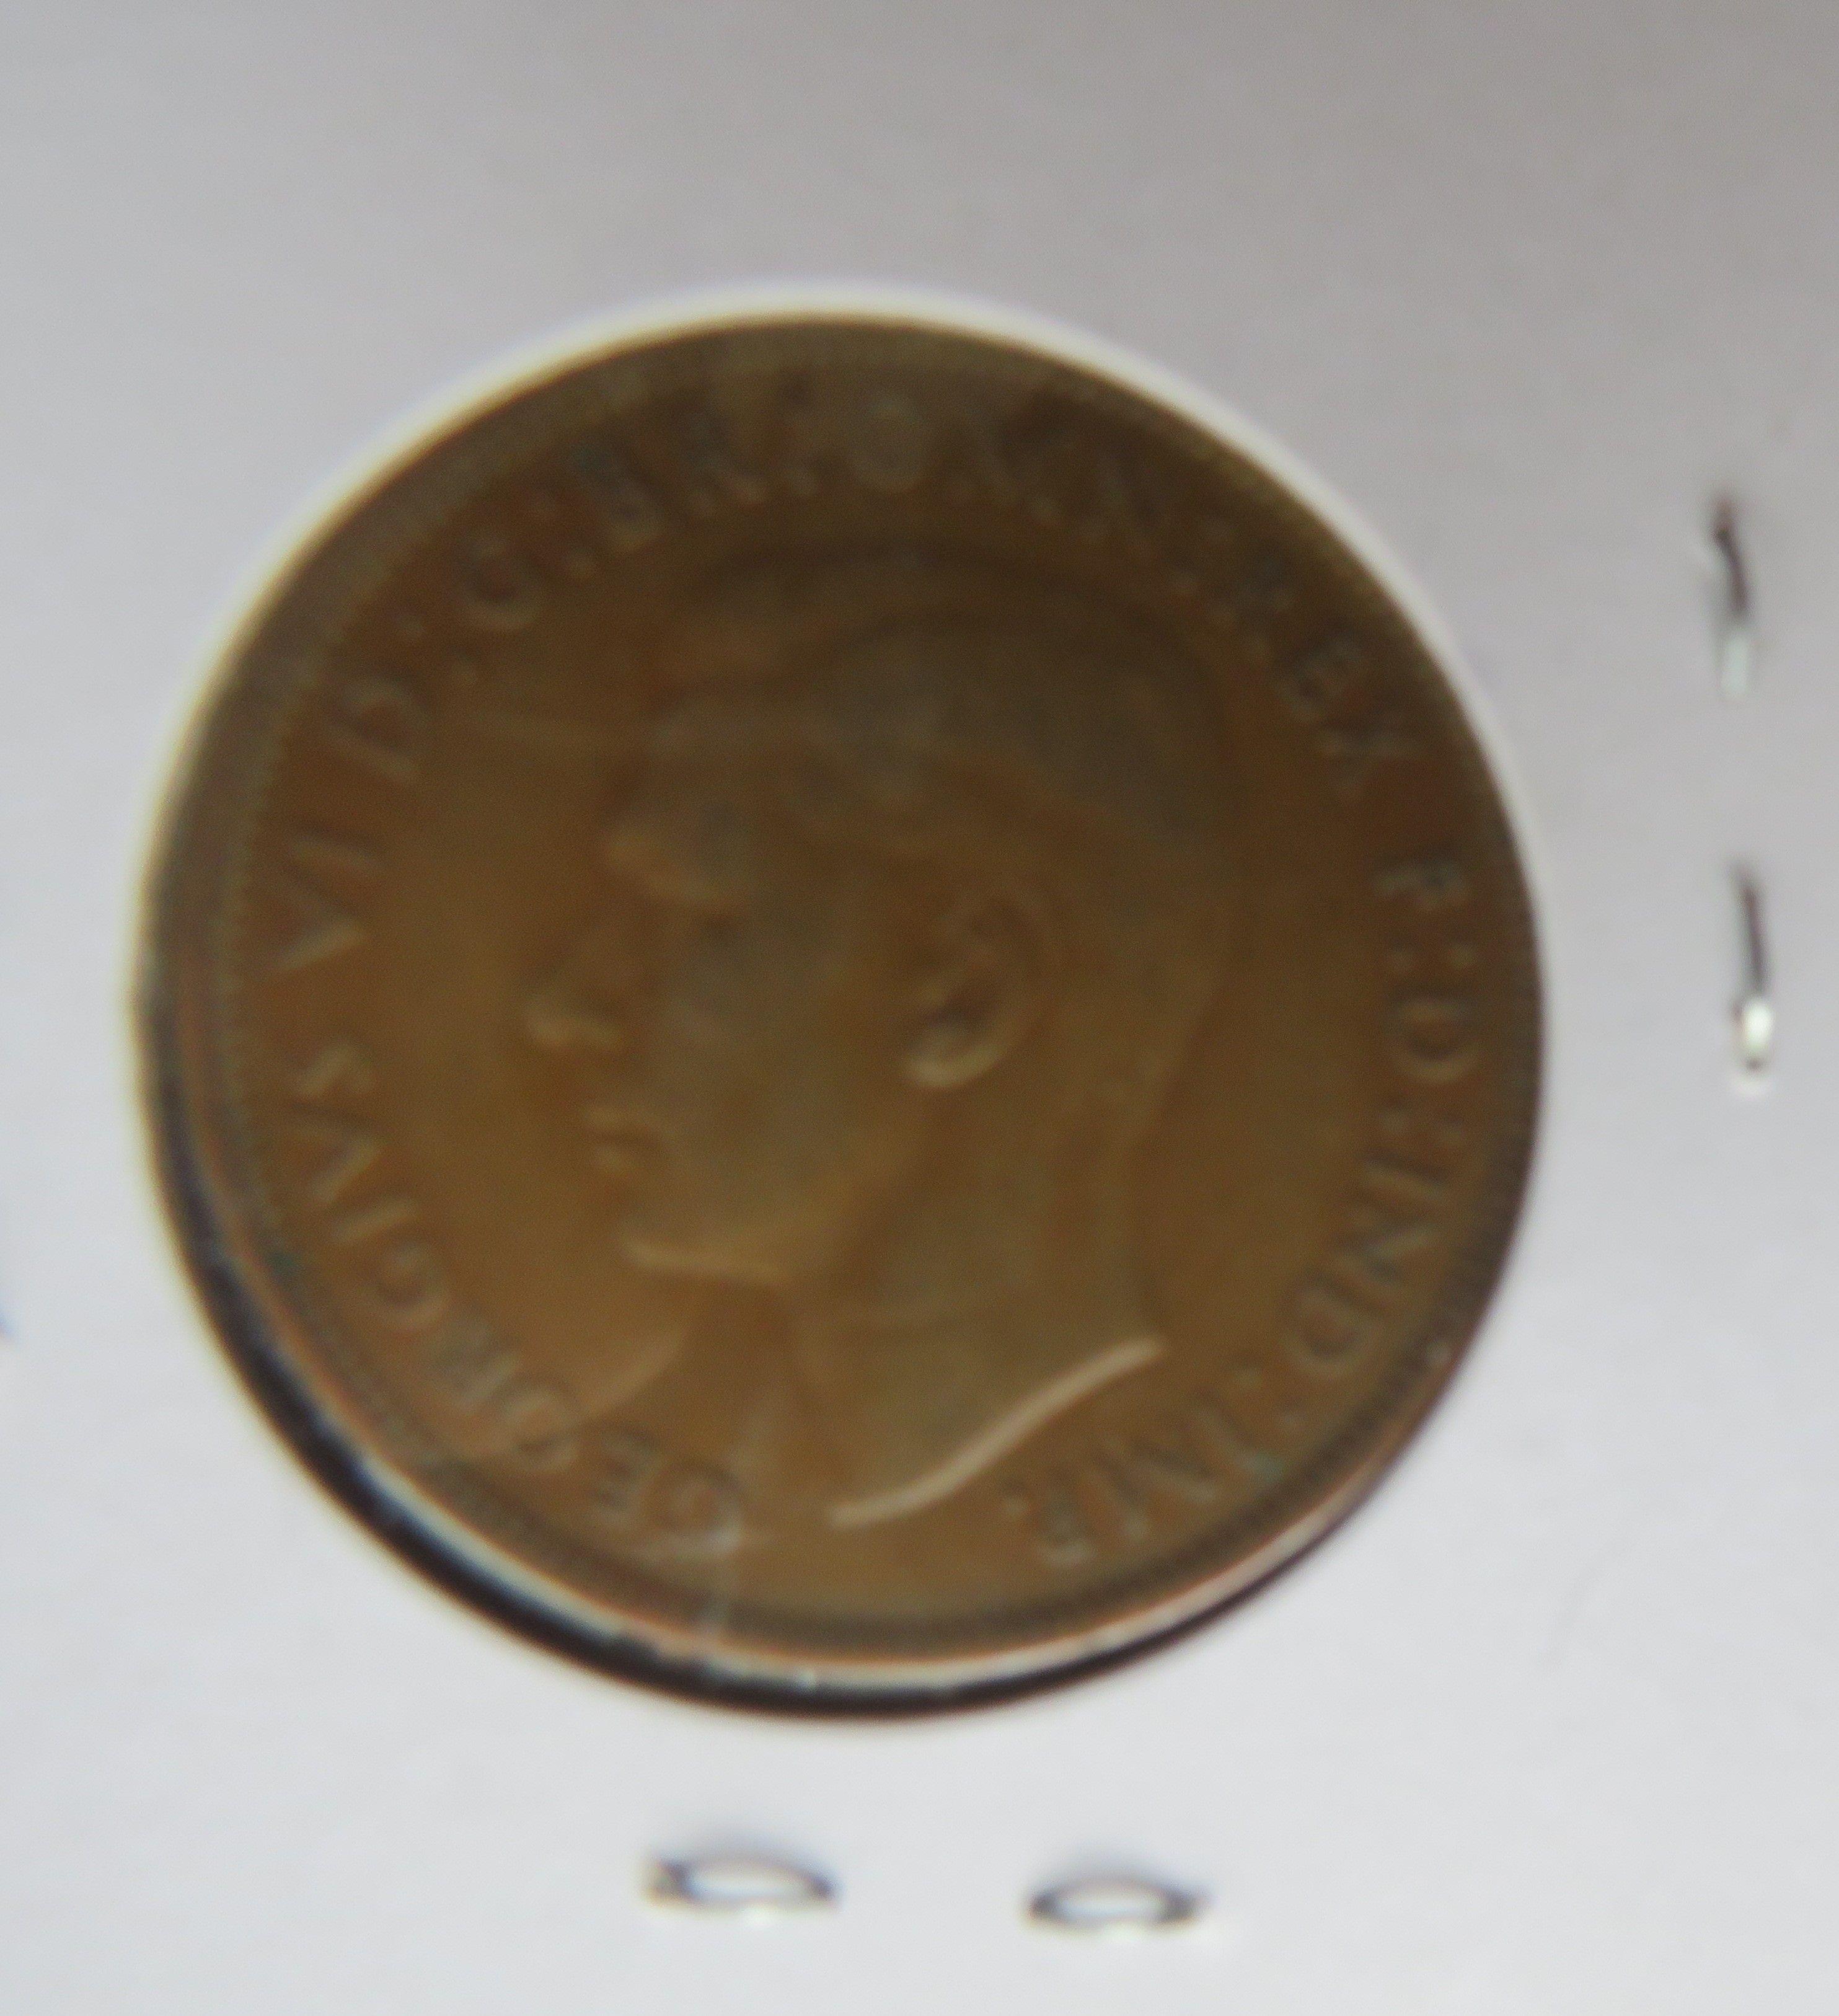 1947- 1 Cent Great Britton